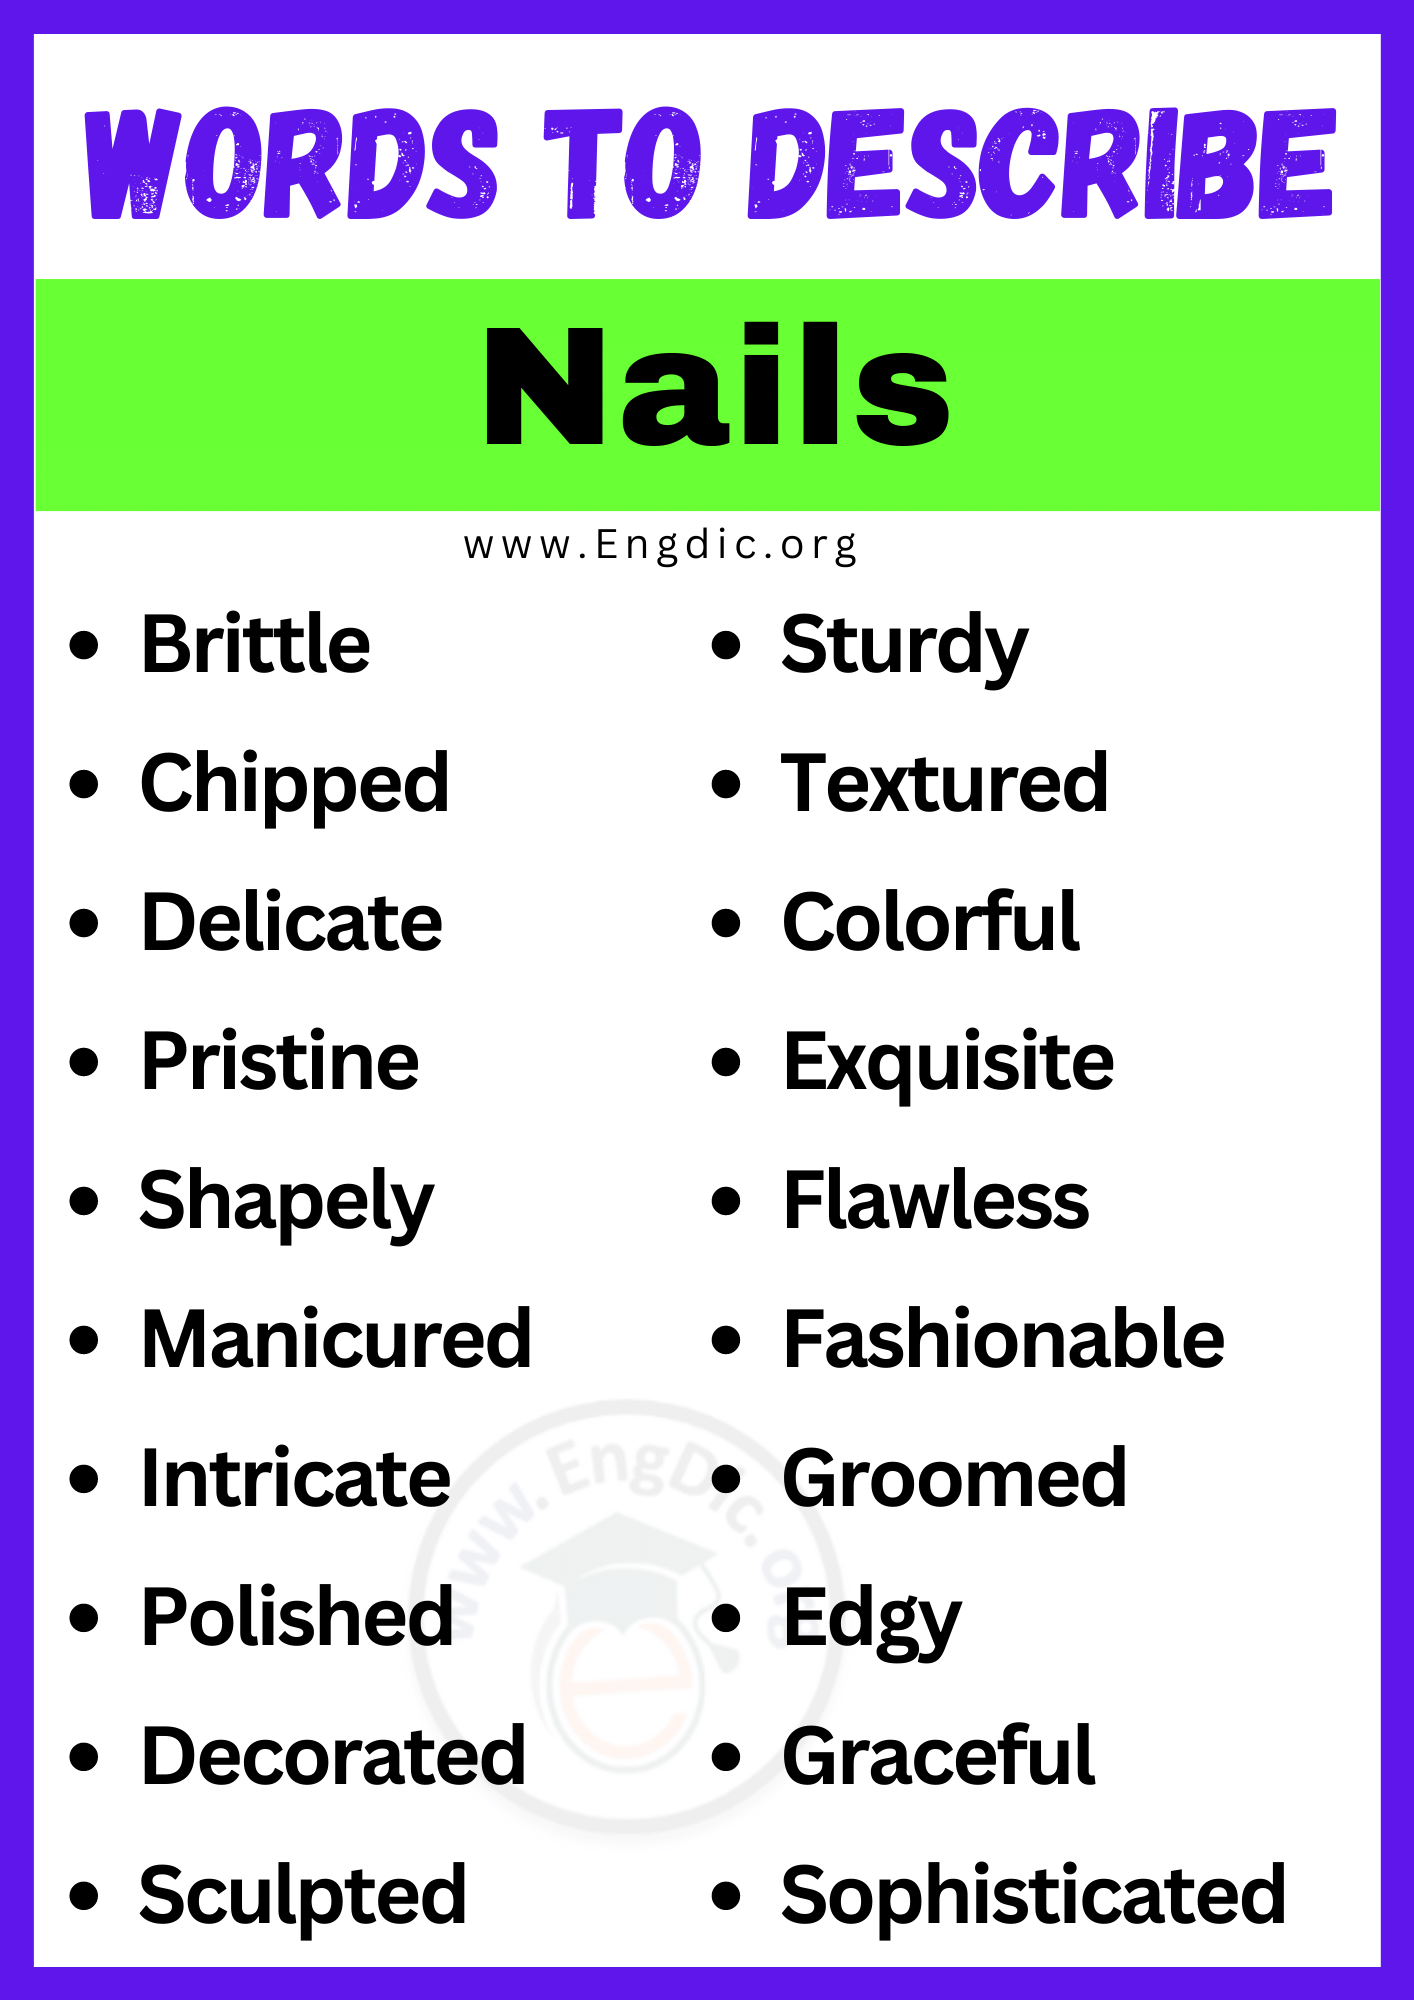 Words to Describe Nails